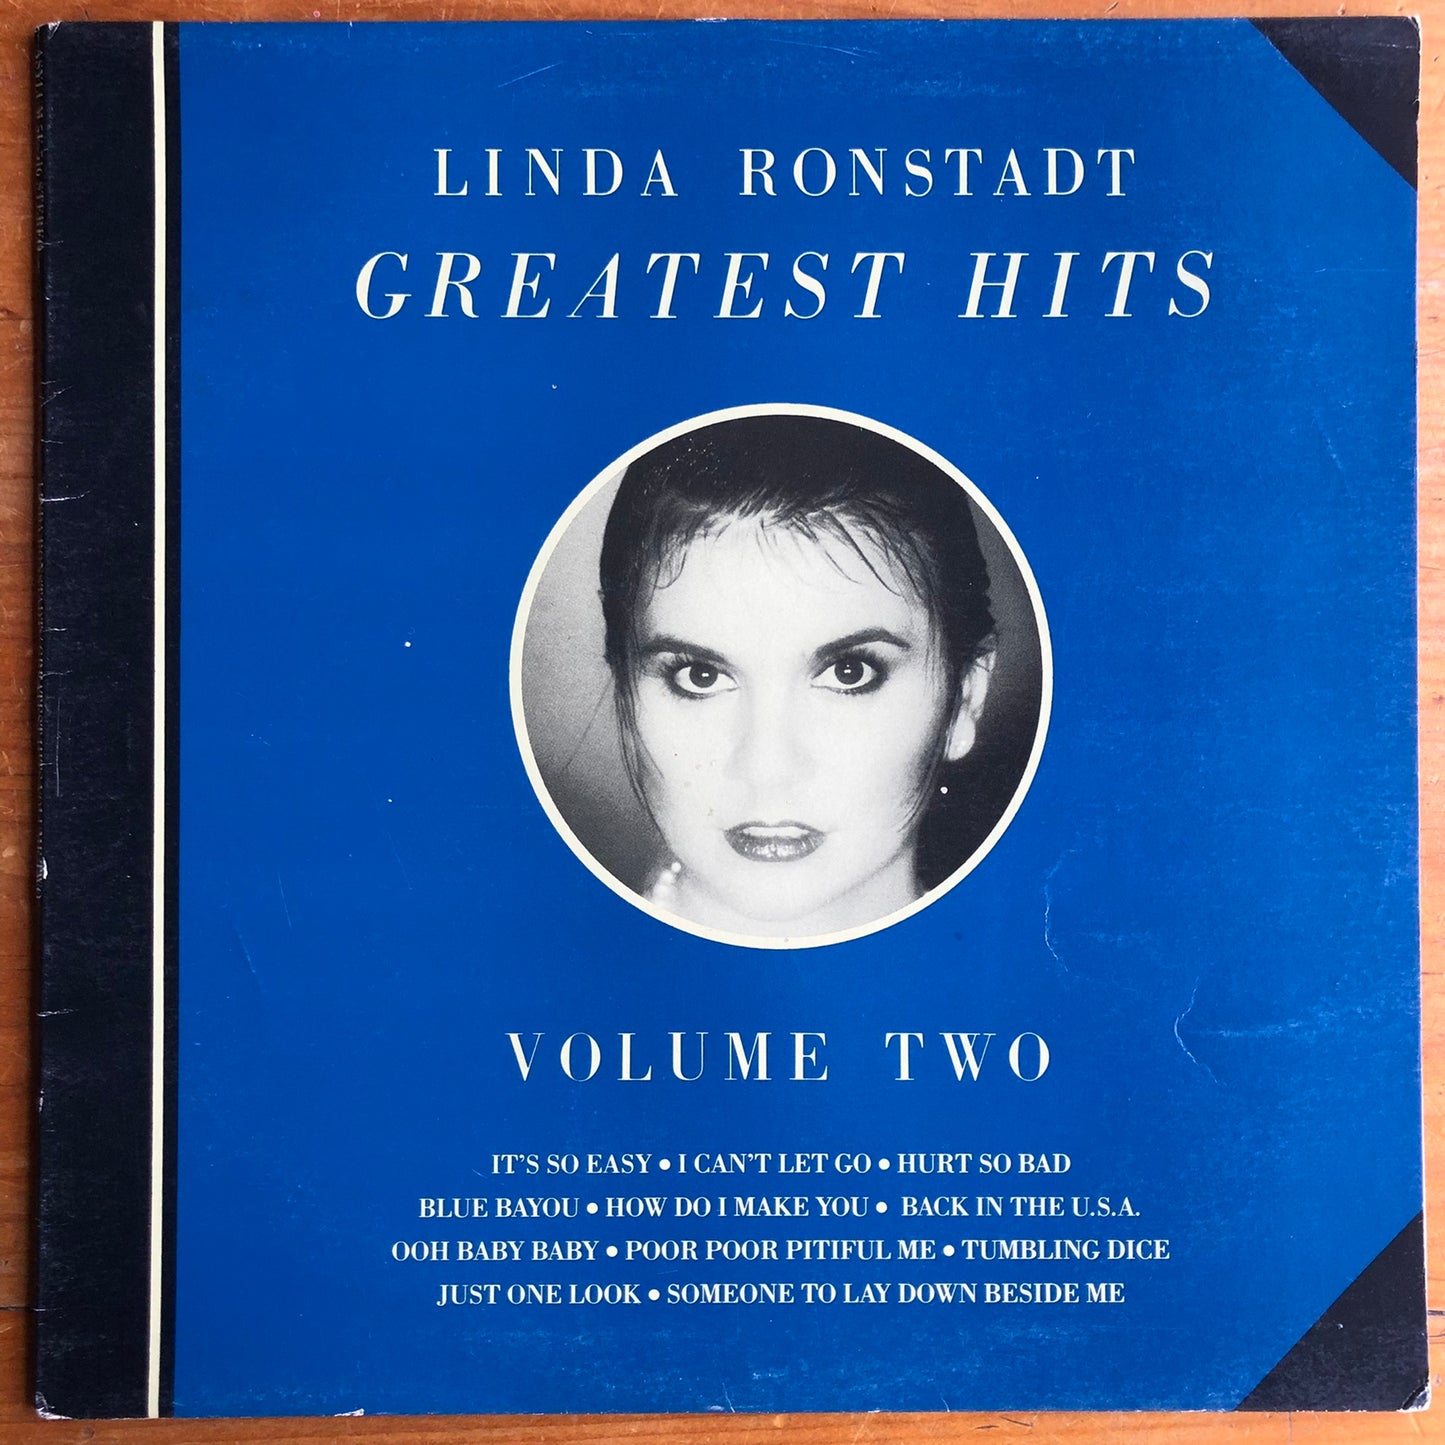 Linda Ronstadt - Greatest Hits Volume 2